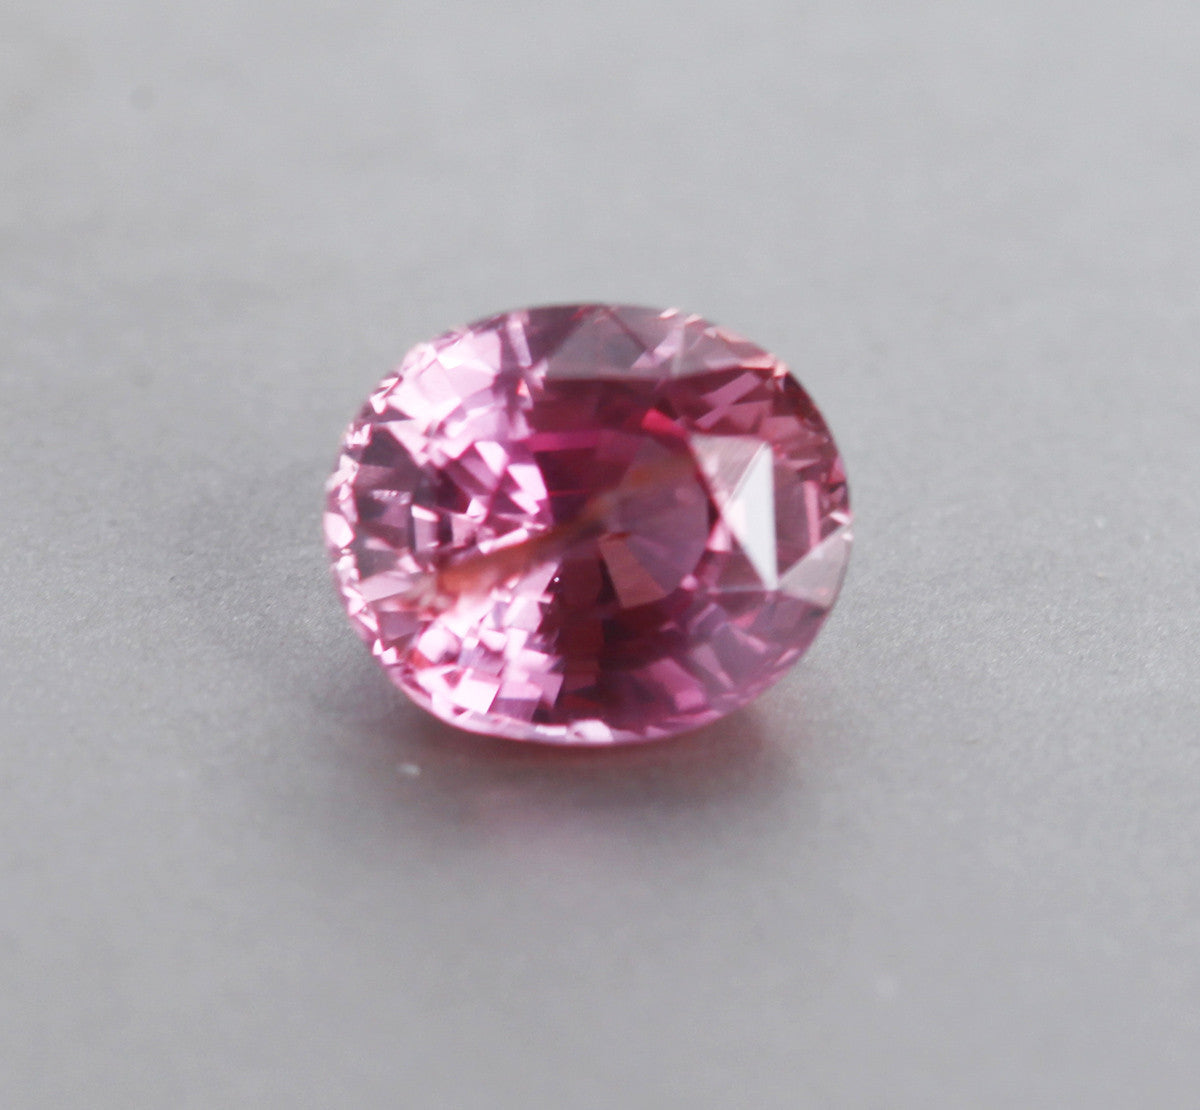 Loose oval-shaped orange pink sapphire